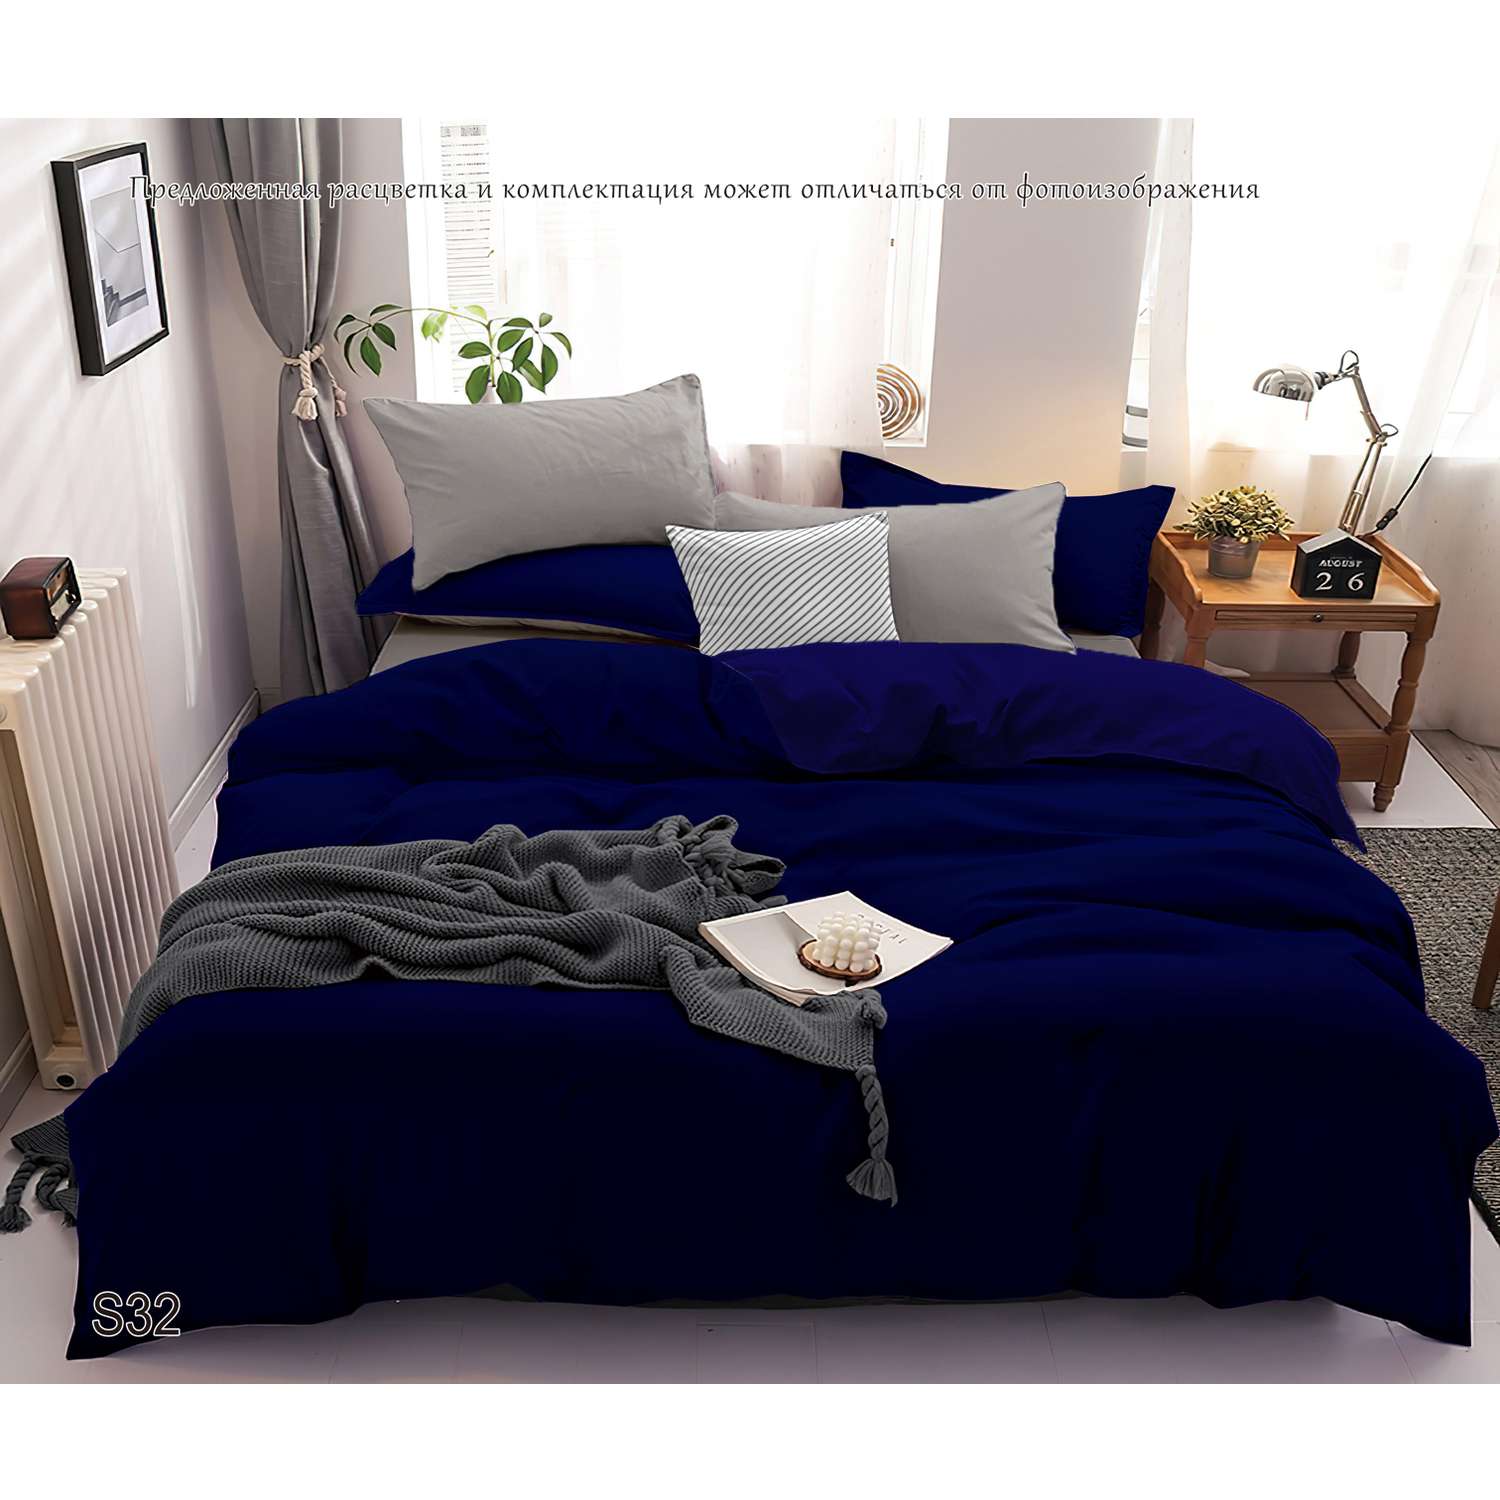 Комплект постельного белья PAVLine Манетти полисатин Евро темно-синий/серый S32 - фото 4